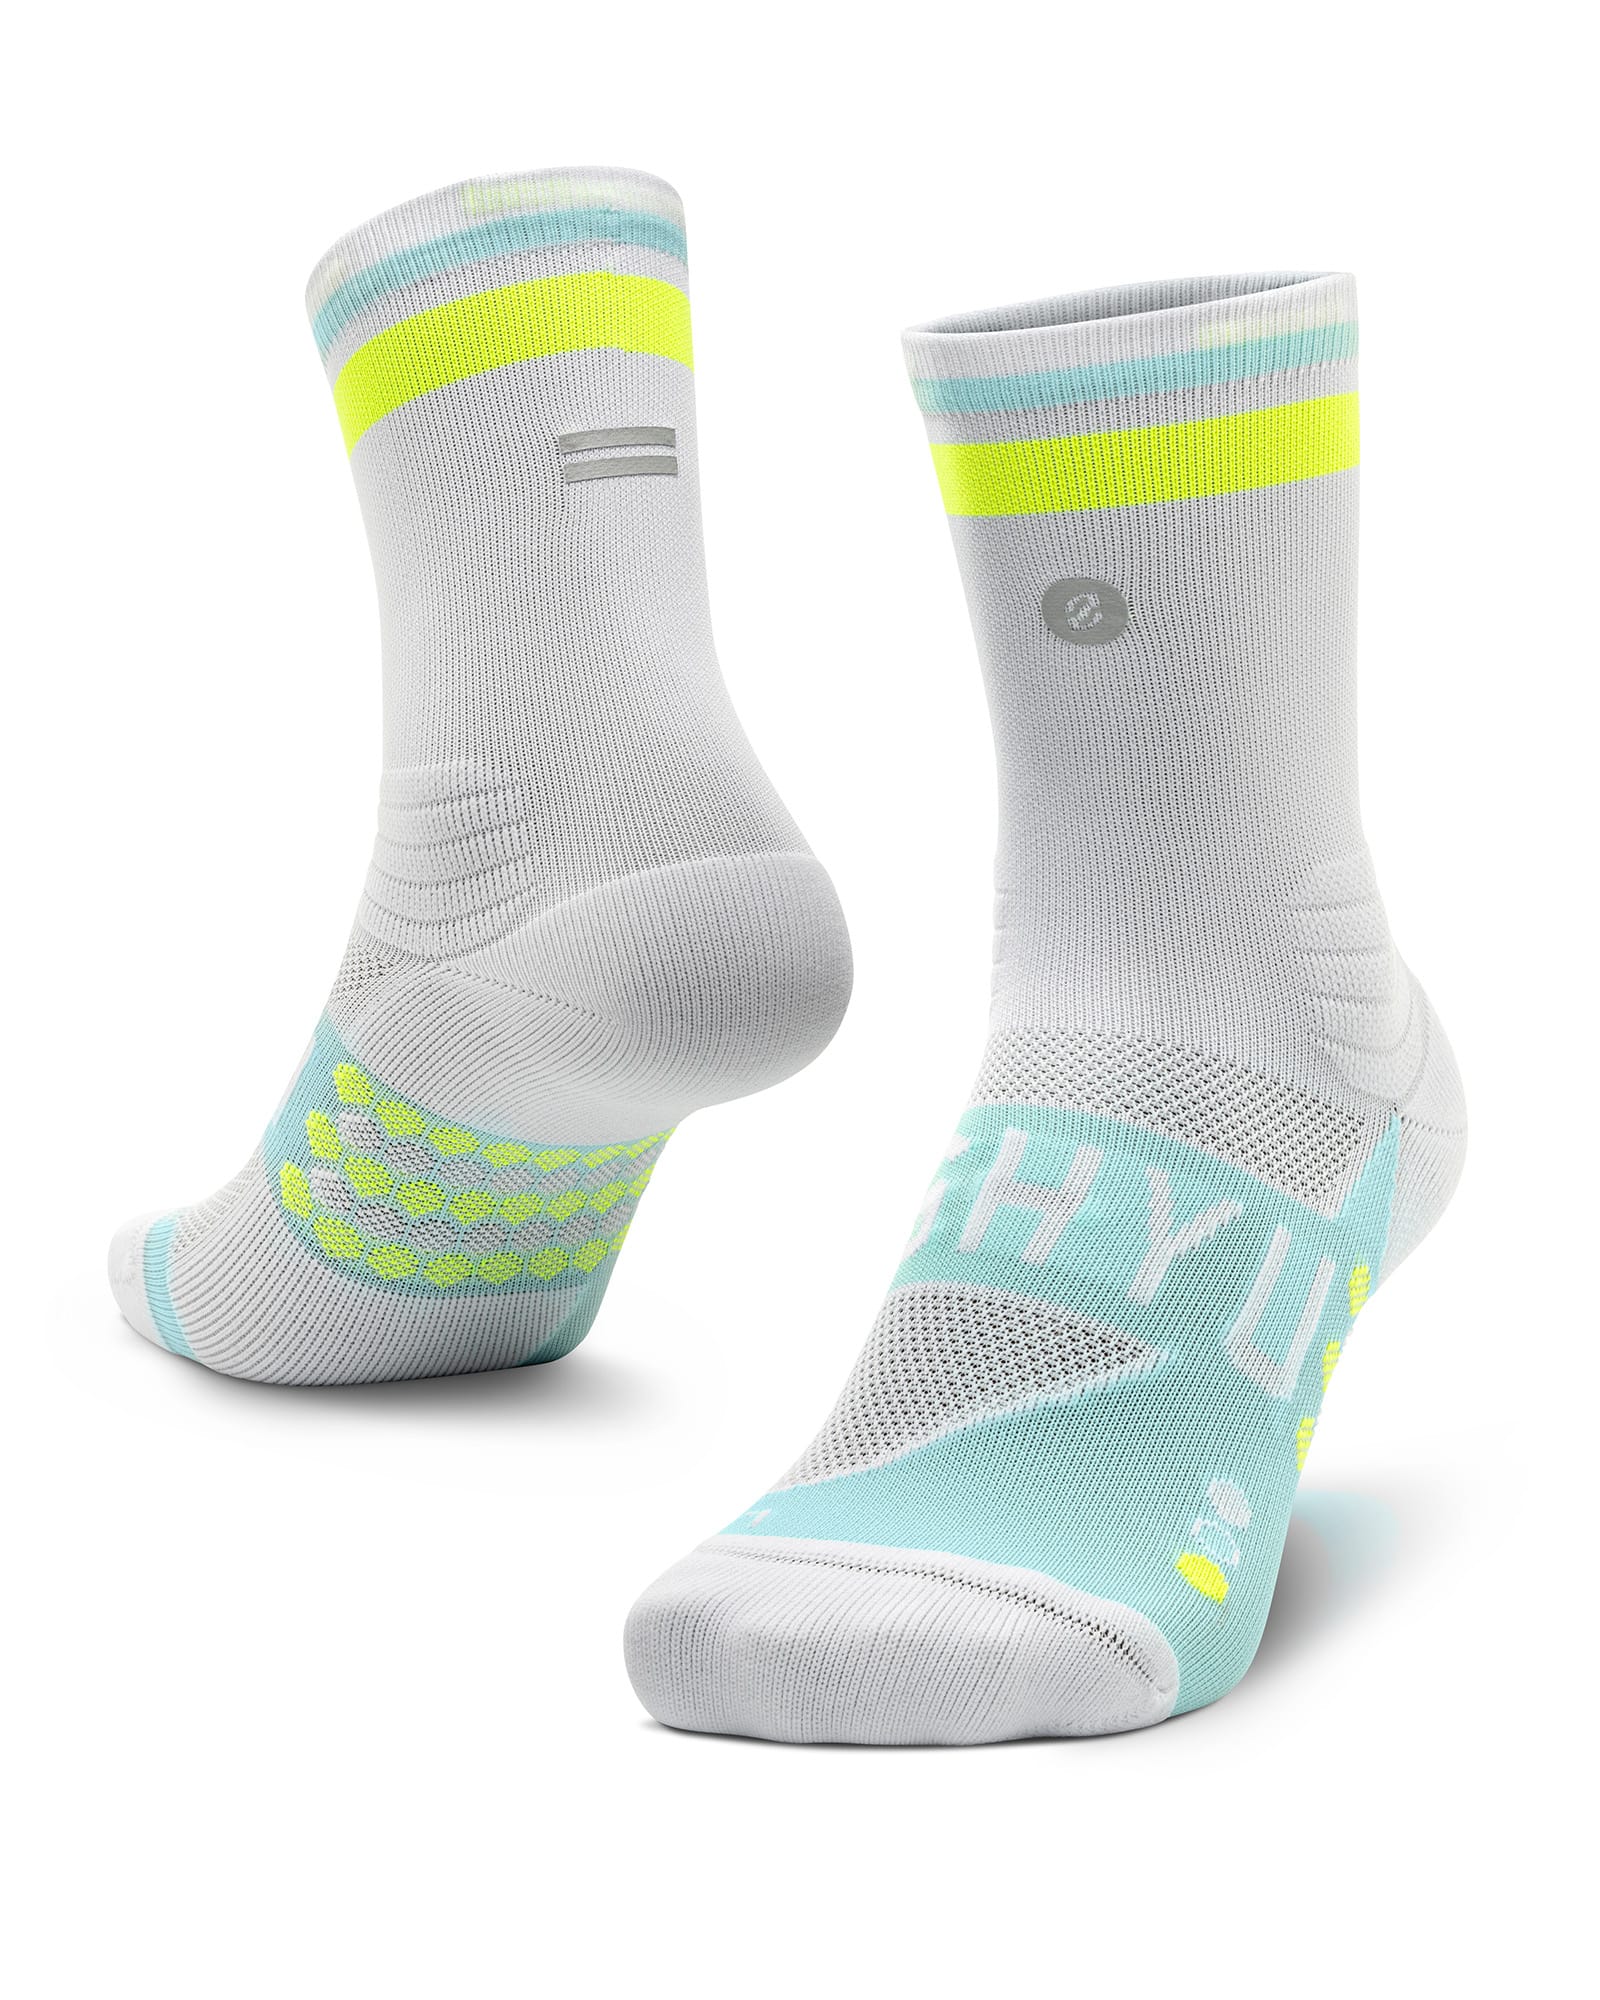 SHYU racing socks - white | mint | volt